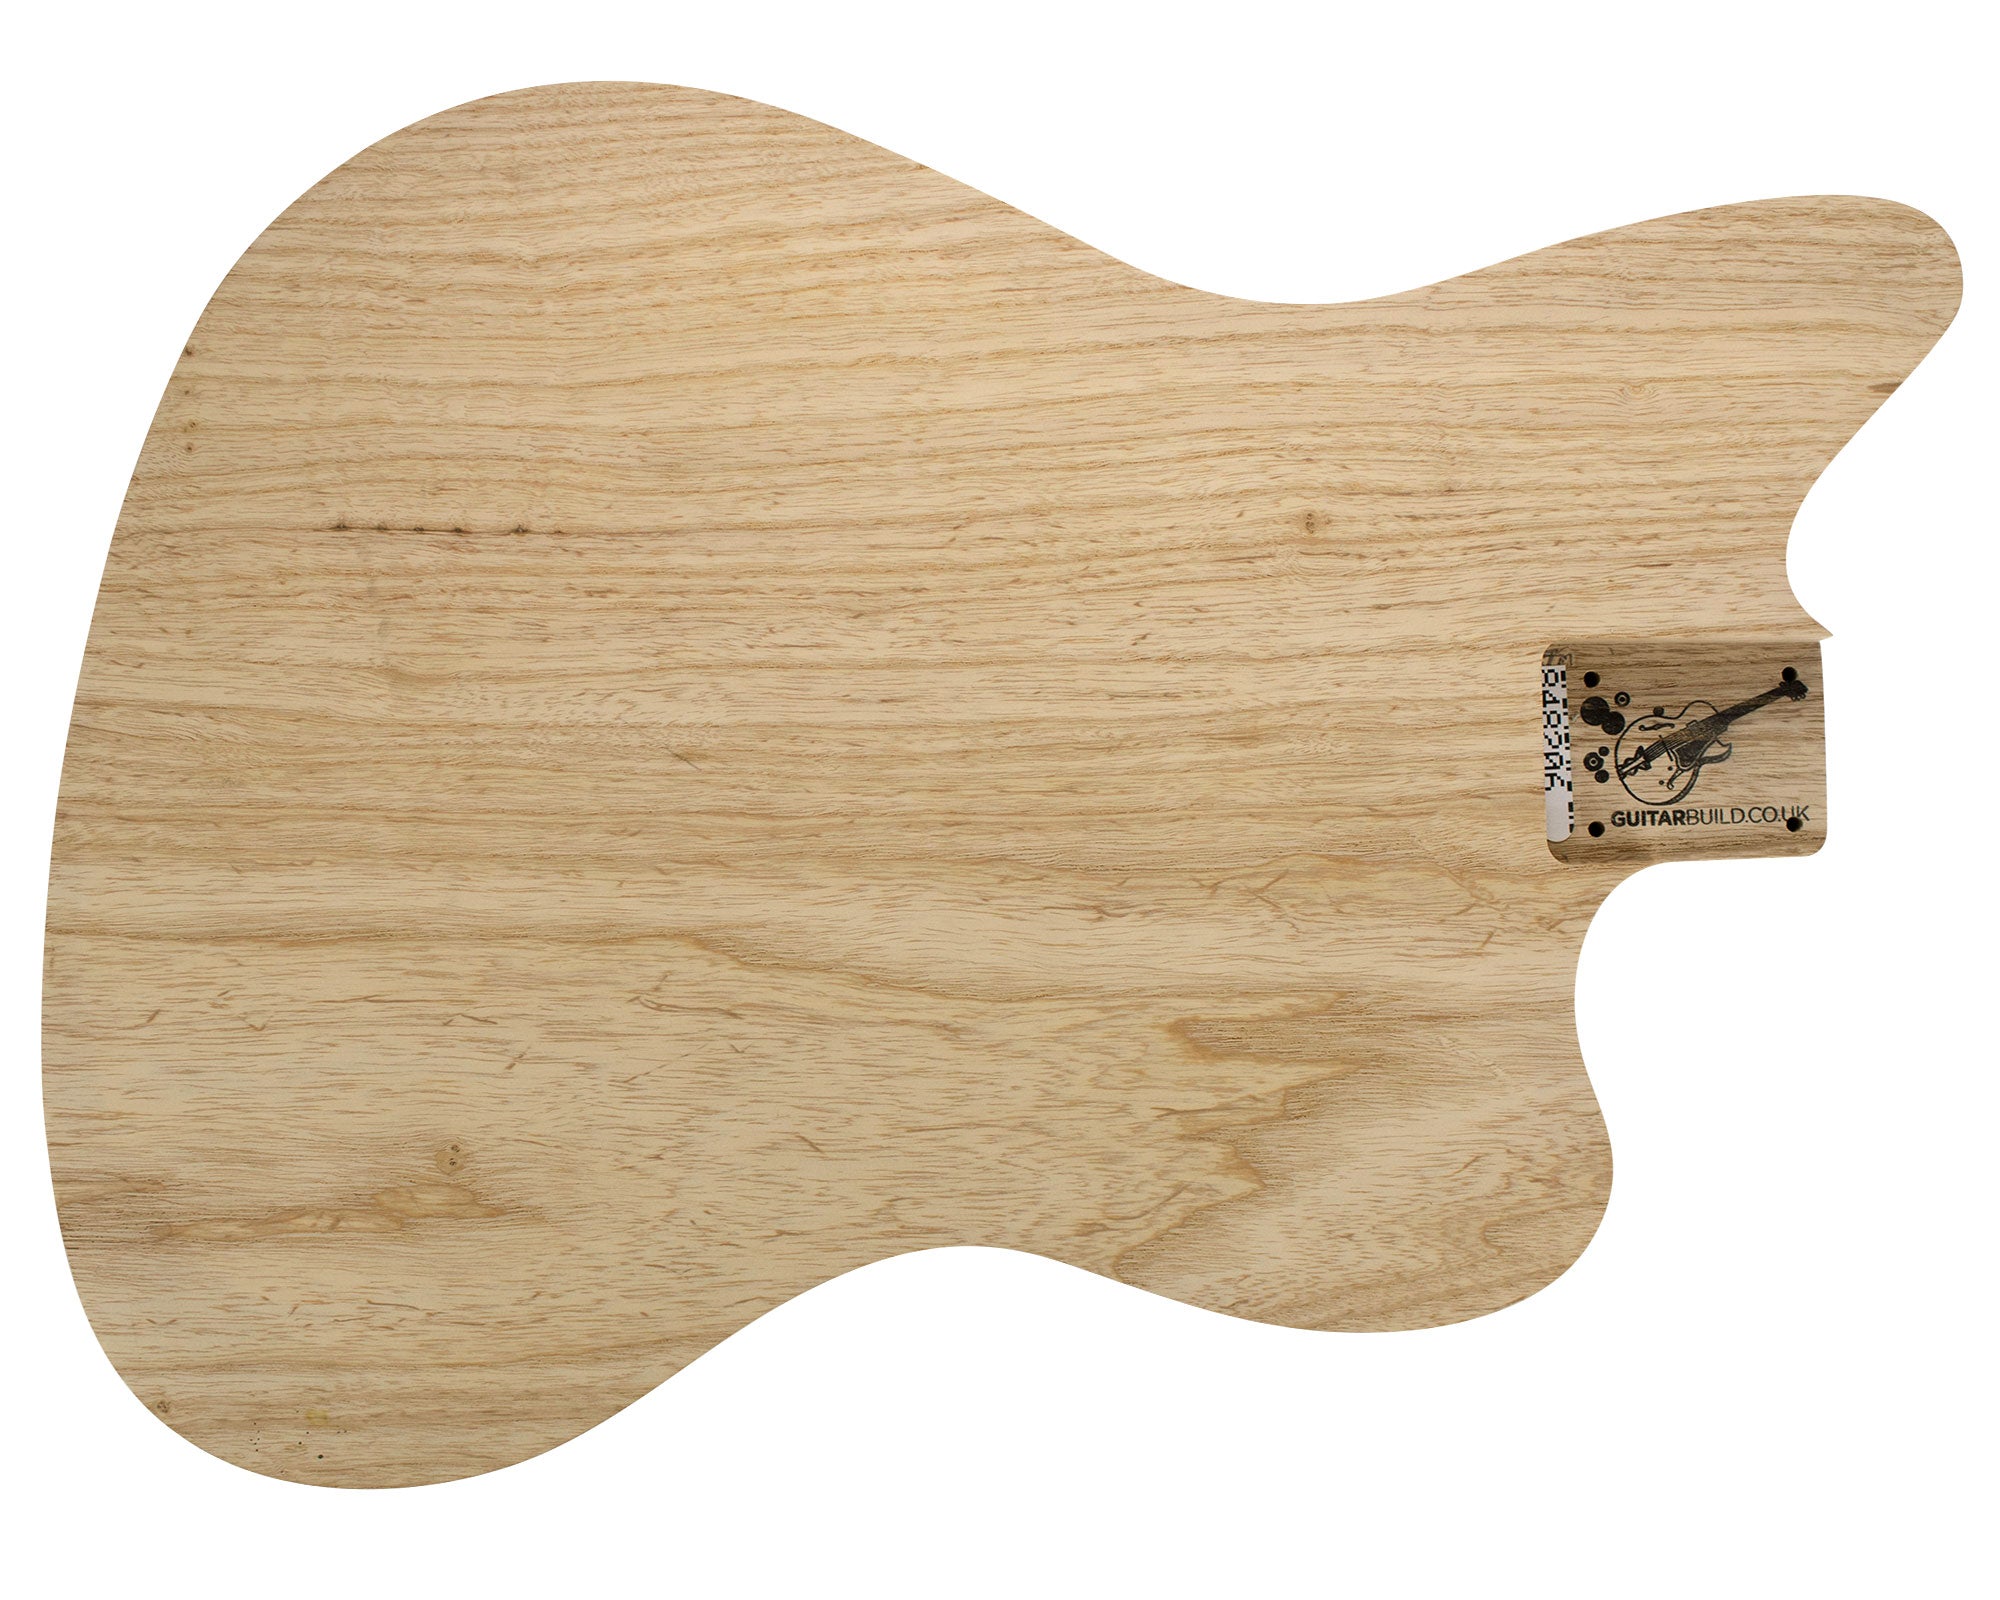 TM SHAPED WOOD BLANK 1pc Swamp Ash 2.6 Kg - 848206-Guitar Bodies - In Stock-Guitarbuild